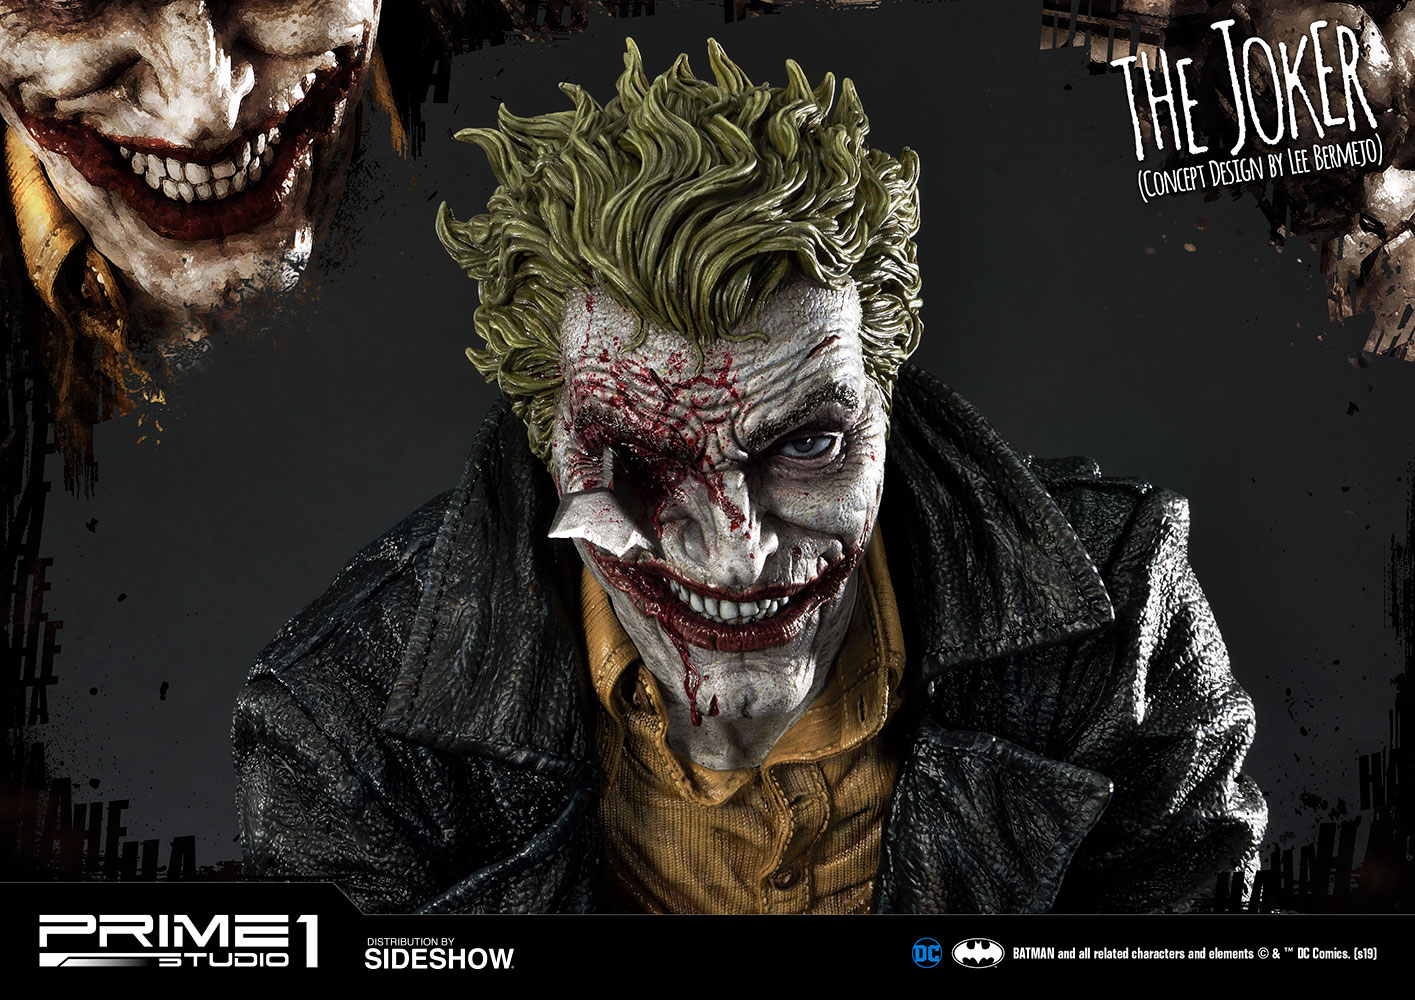 The Joker (Concept Design by Lee Bermejo)